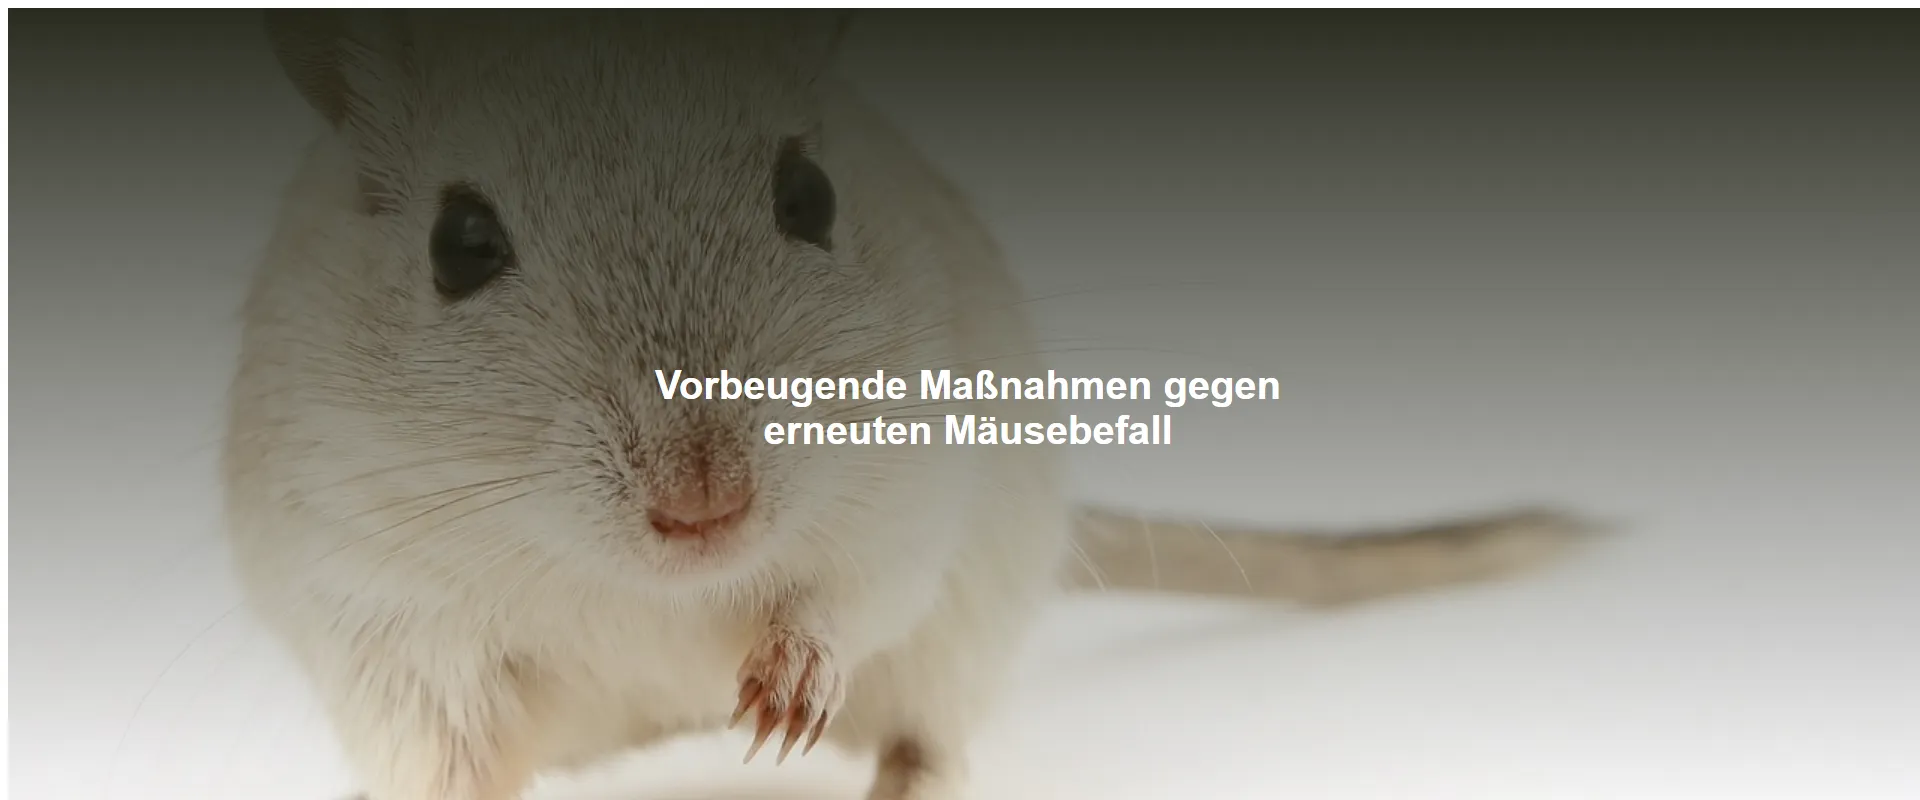 Vorbeugende Maßnahmen gegen erneuten Mäusebefall